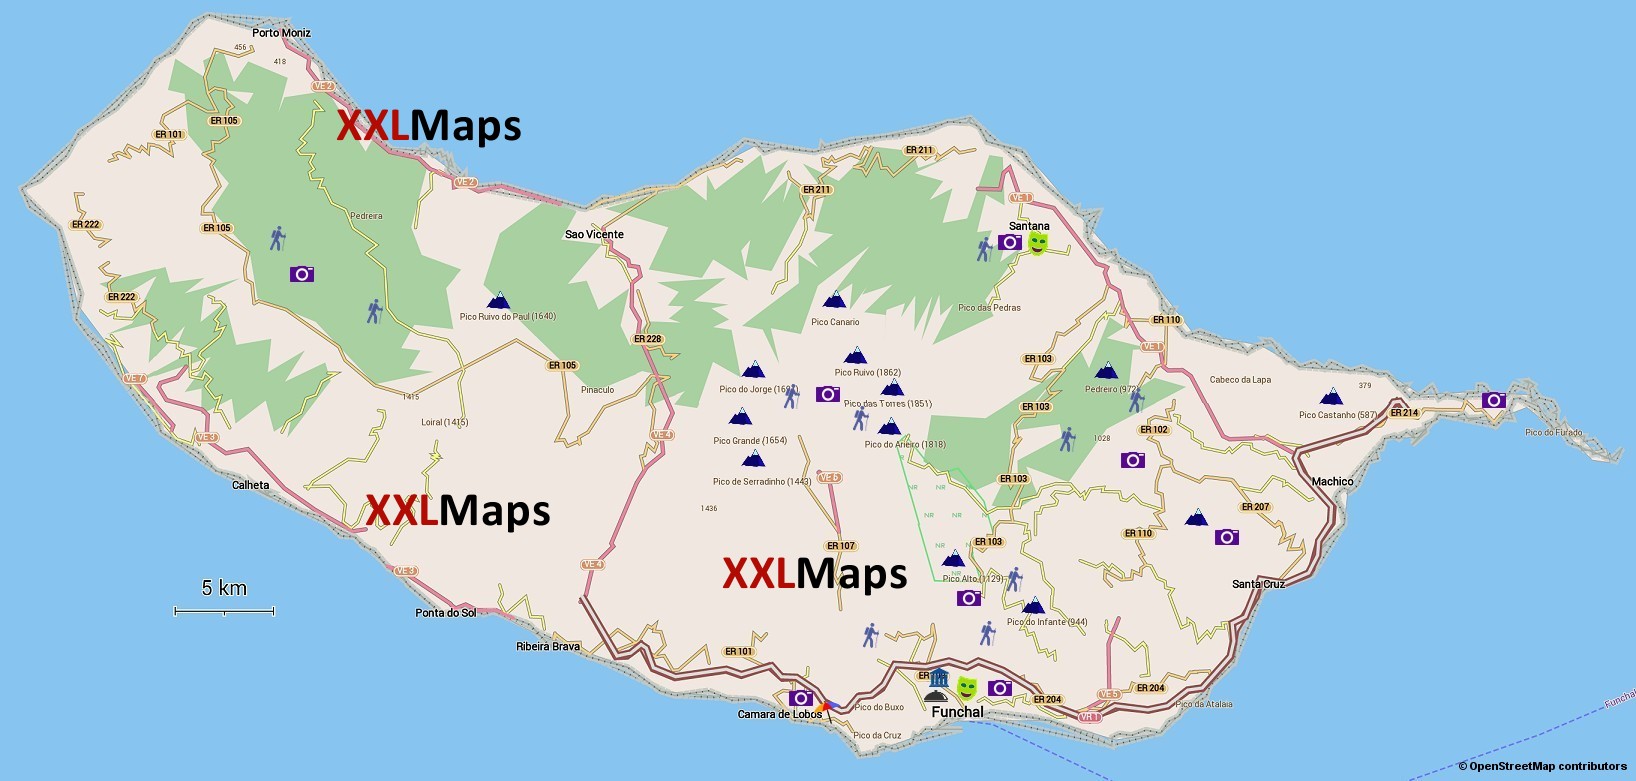 Mapa físico de Madeira